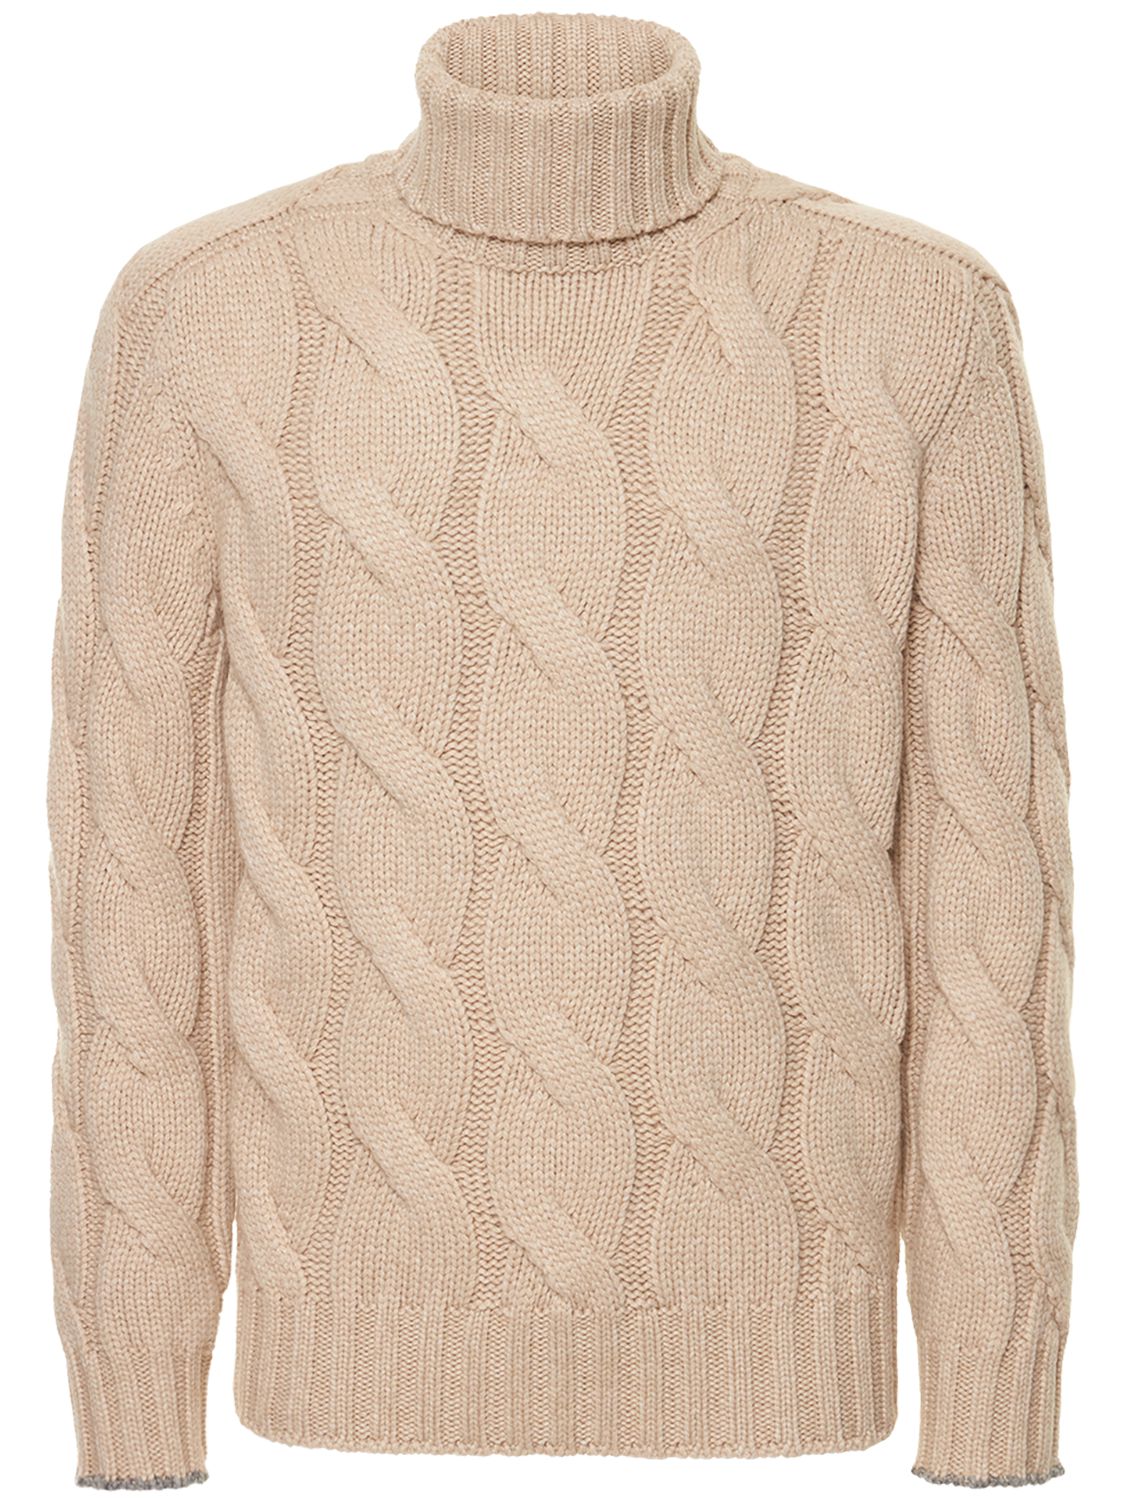 Wool Knit Turtleneck Sweater Luisaviaroma Men Clothing Sweaters Turtlenecks 